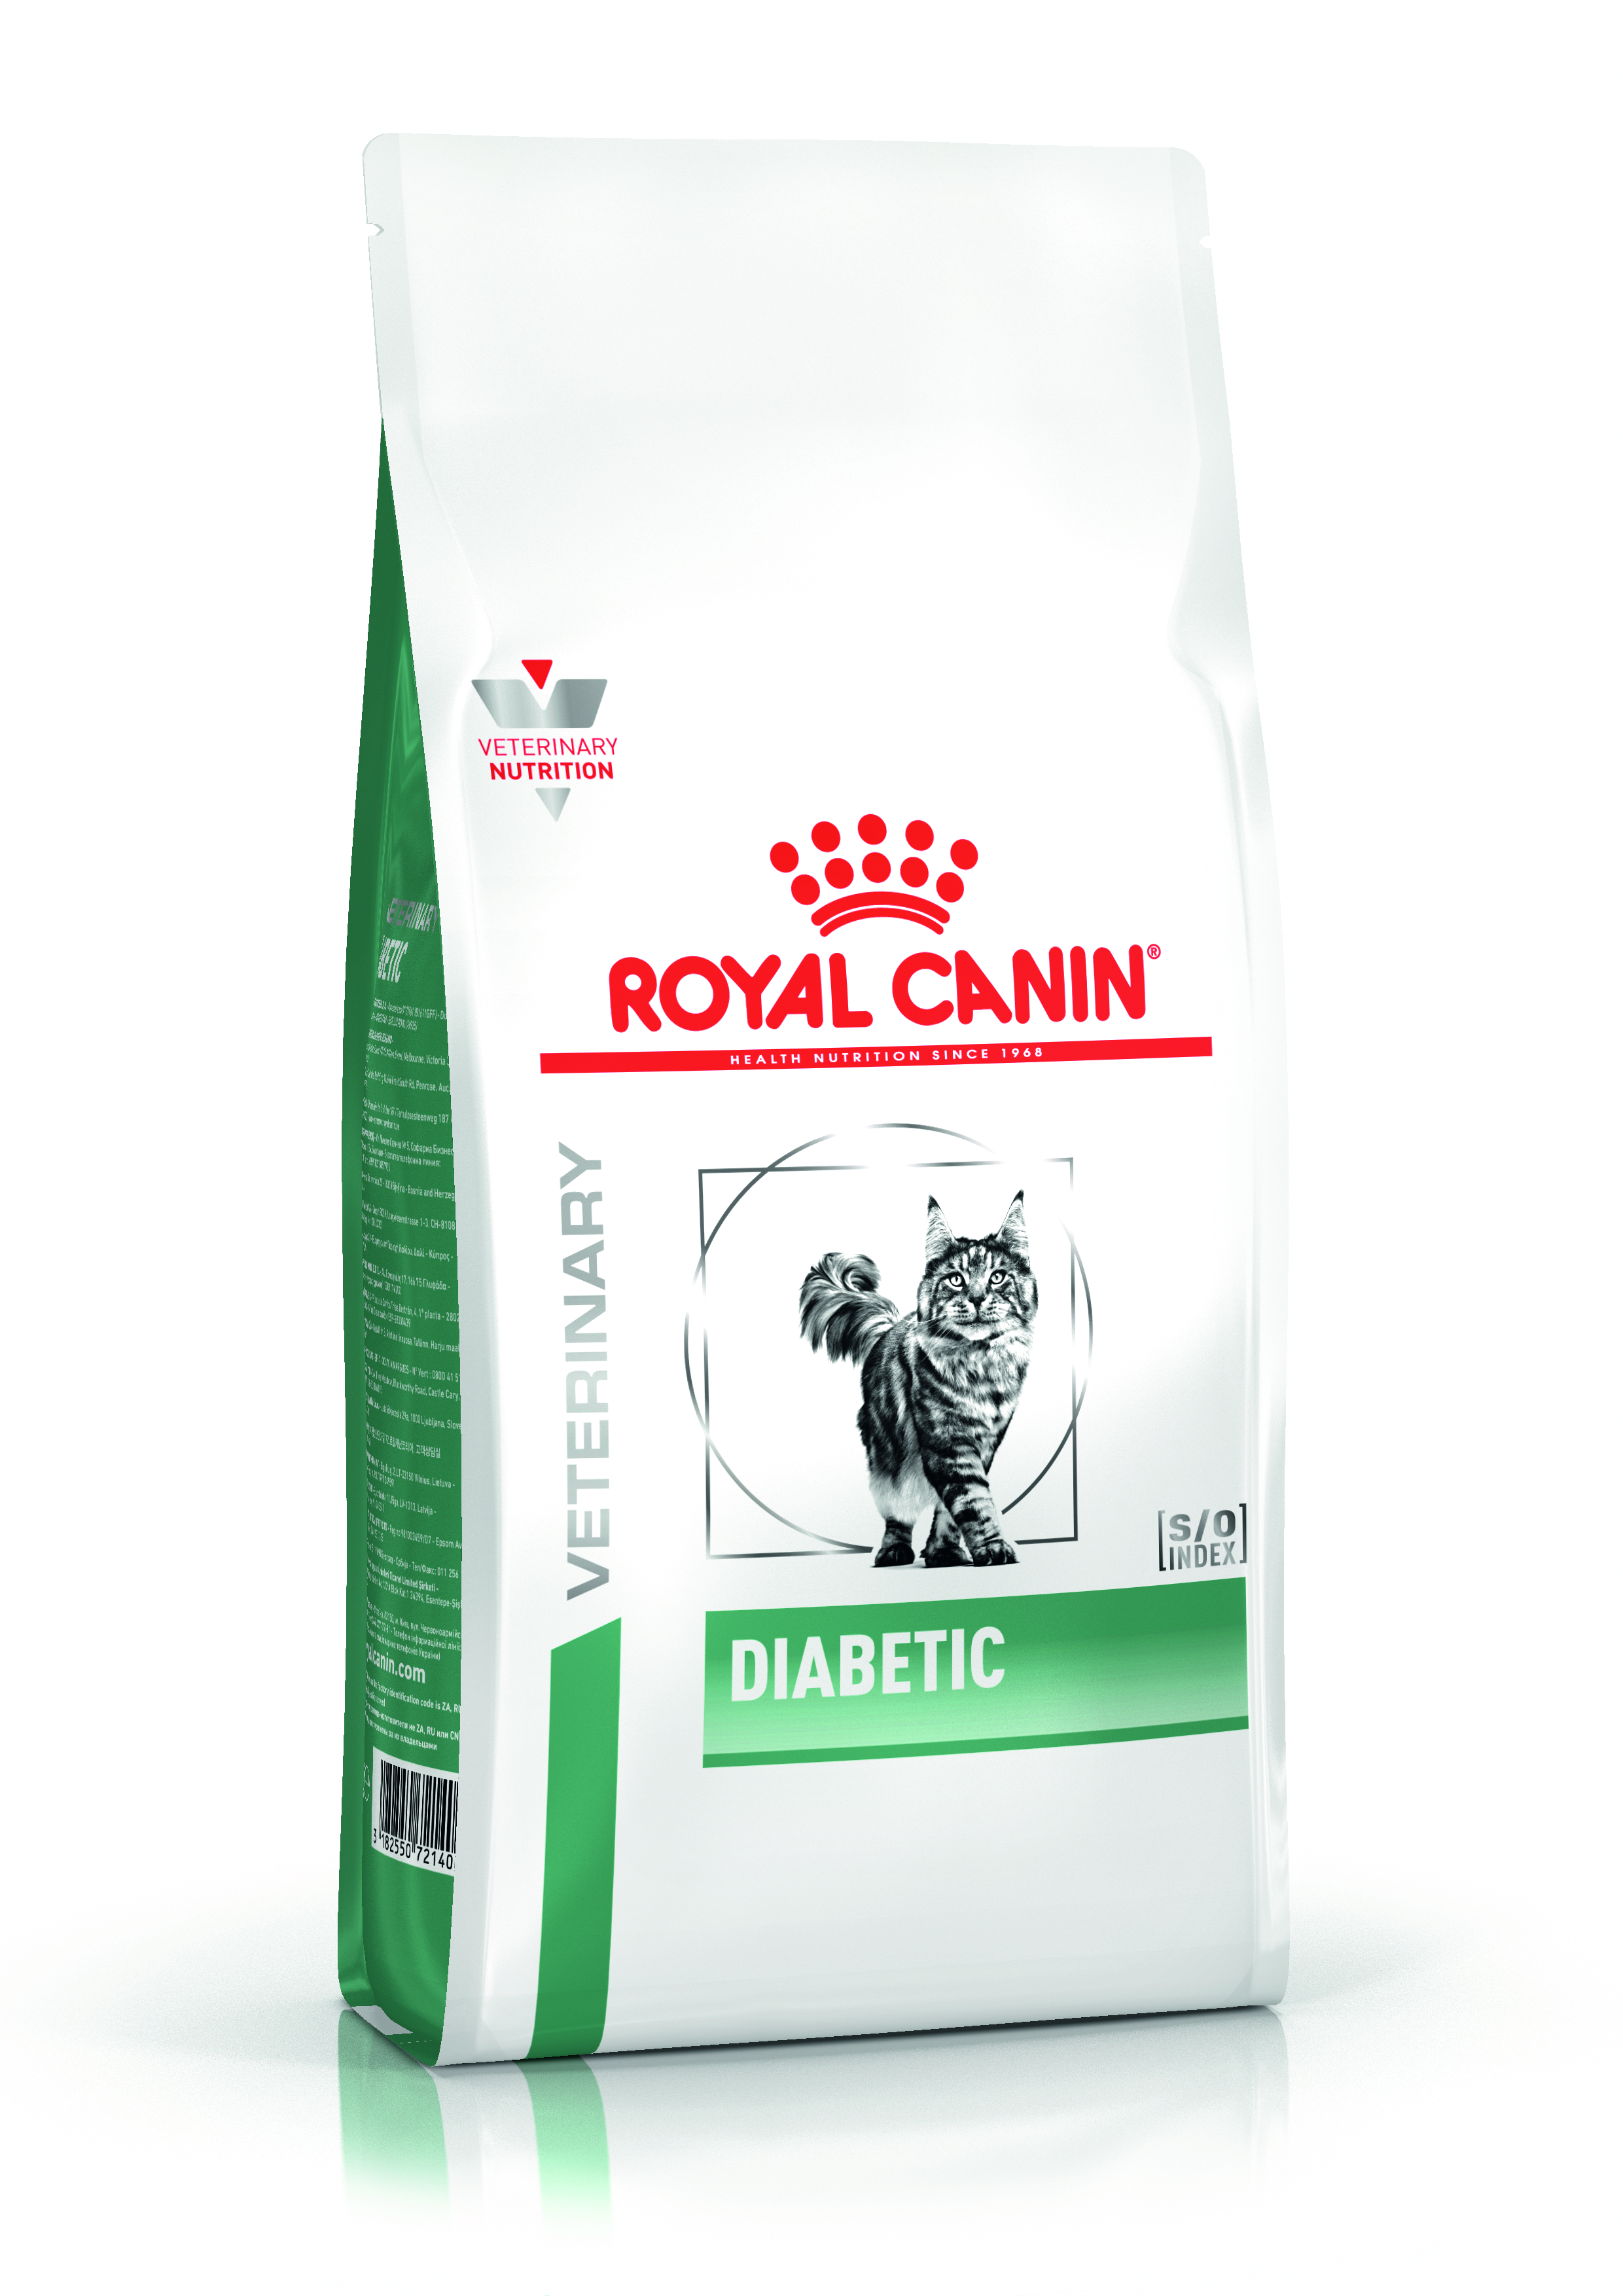 Royal Canin Diabetic Cat Food Ingredients